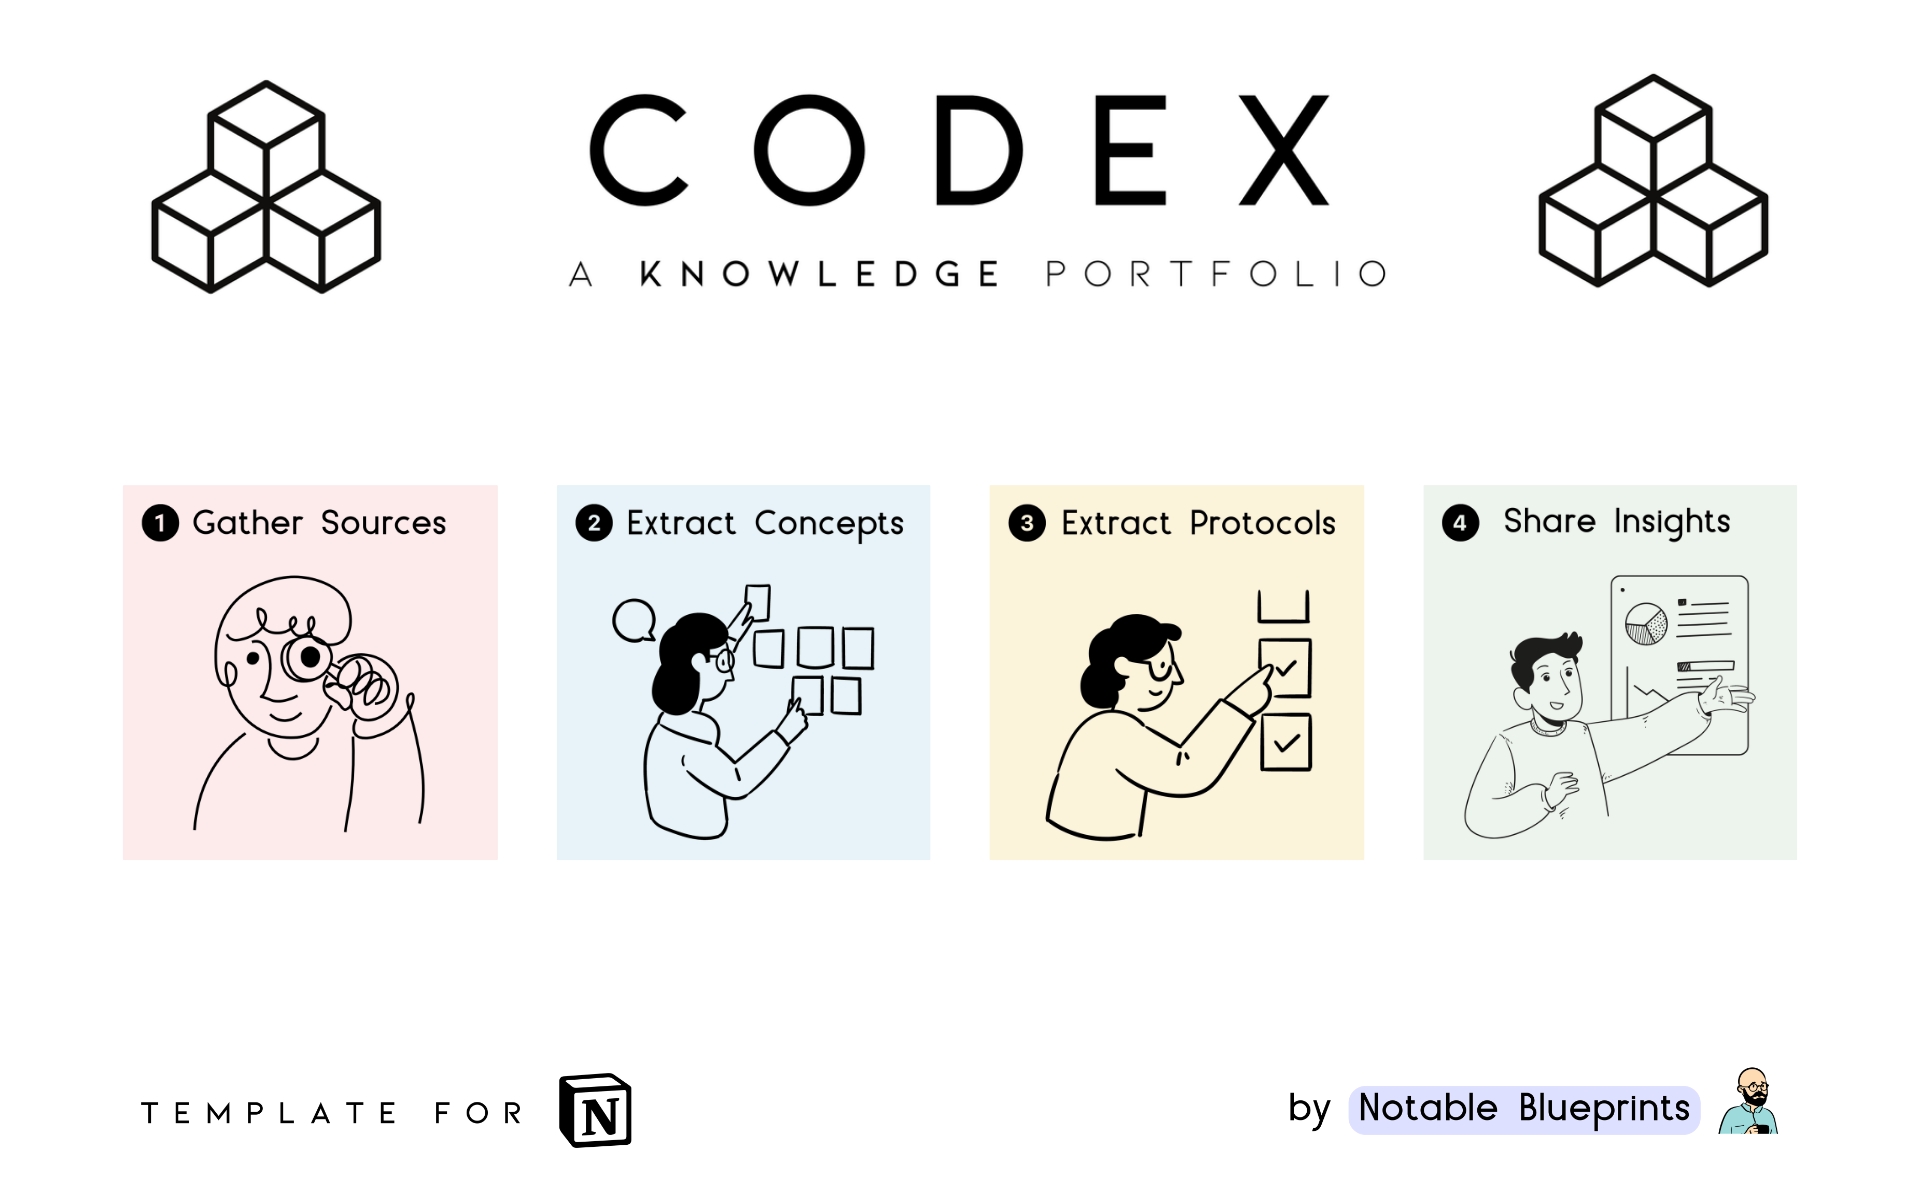 Aperçu du modèle de ⫷ CODEX ⫸ A Knowledge Portfolio